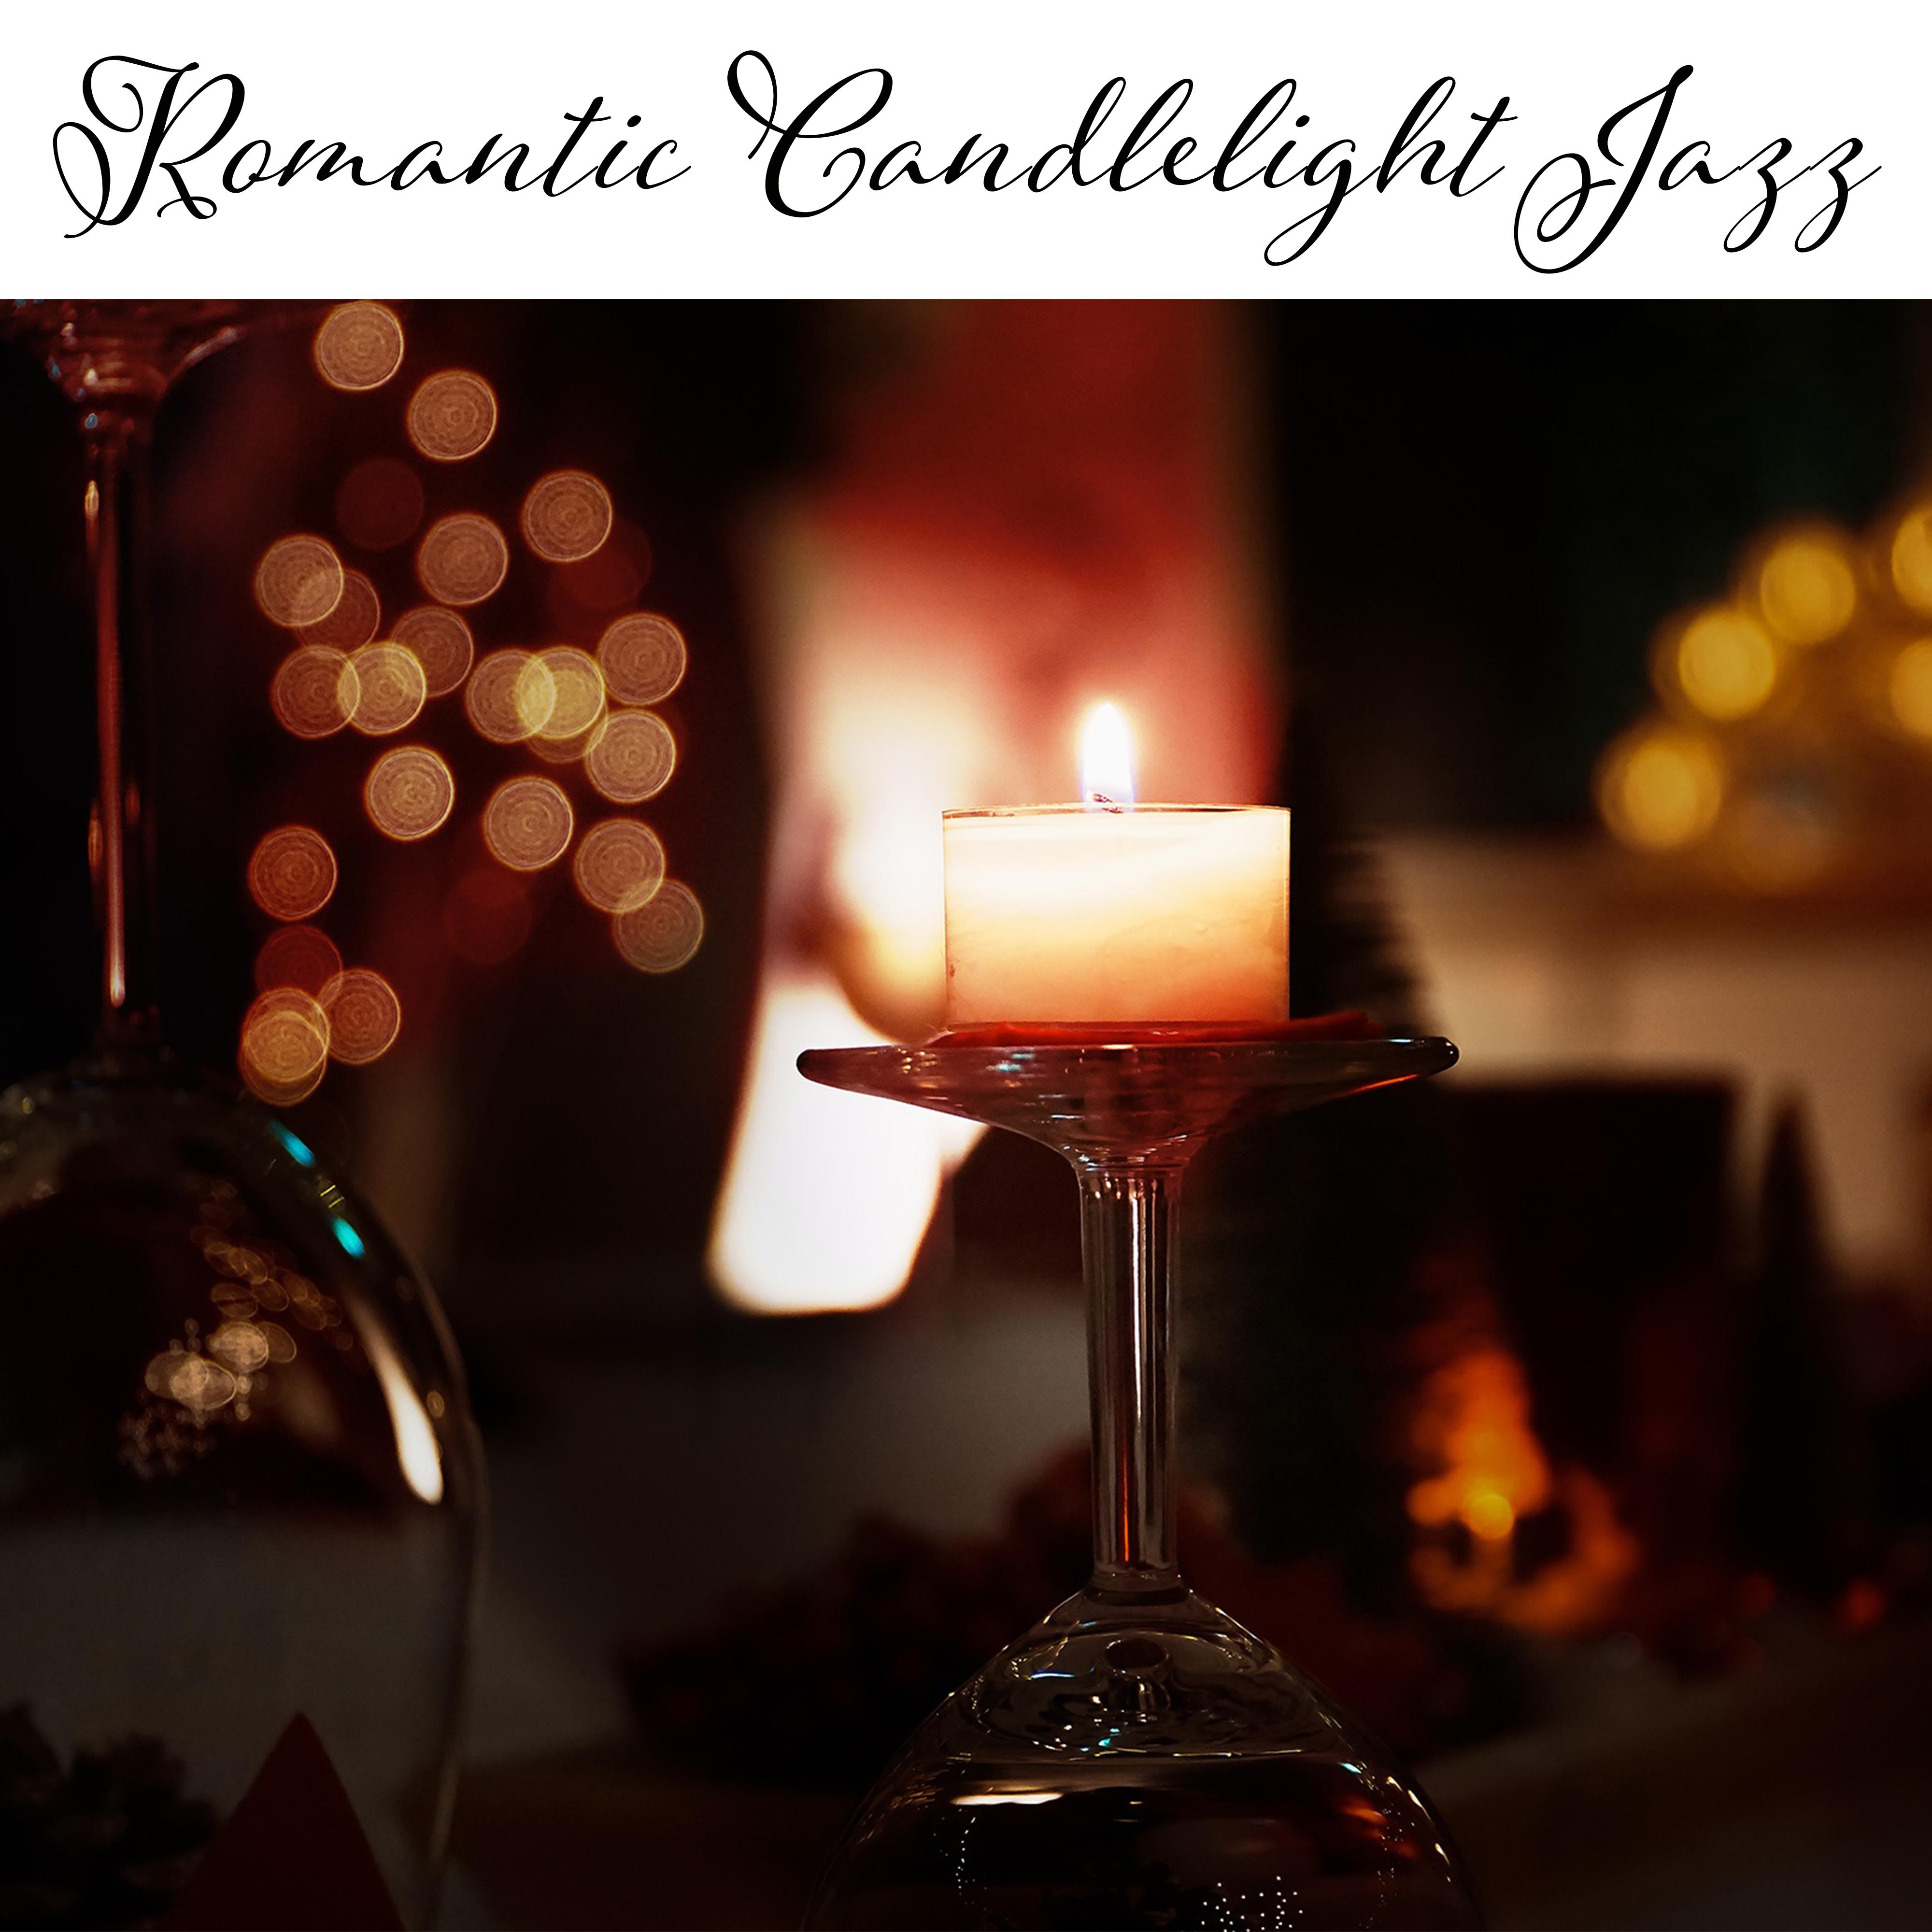 Romantic Candlelight Jazz